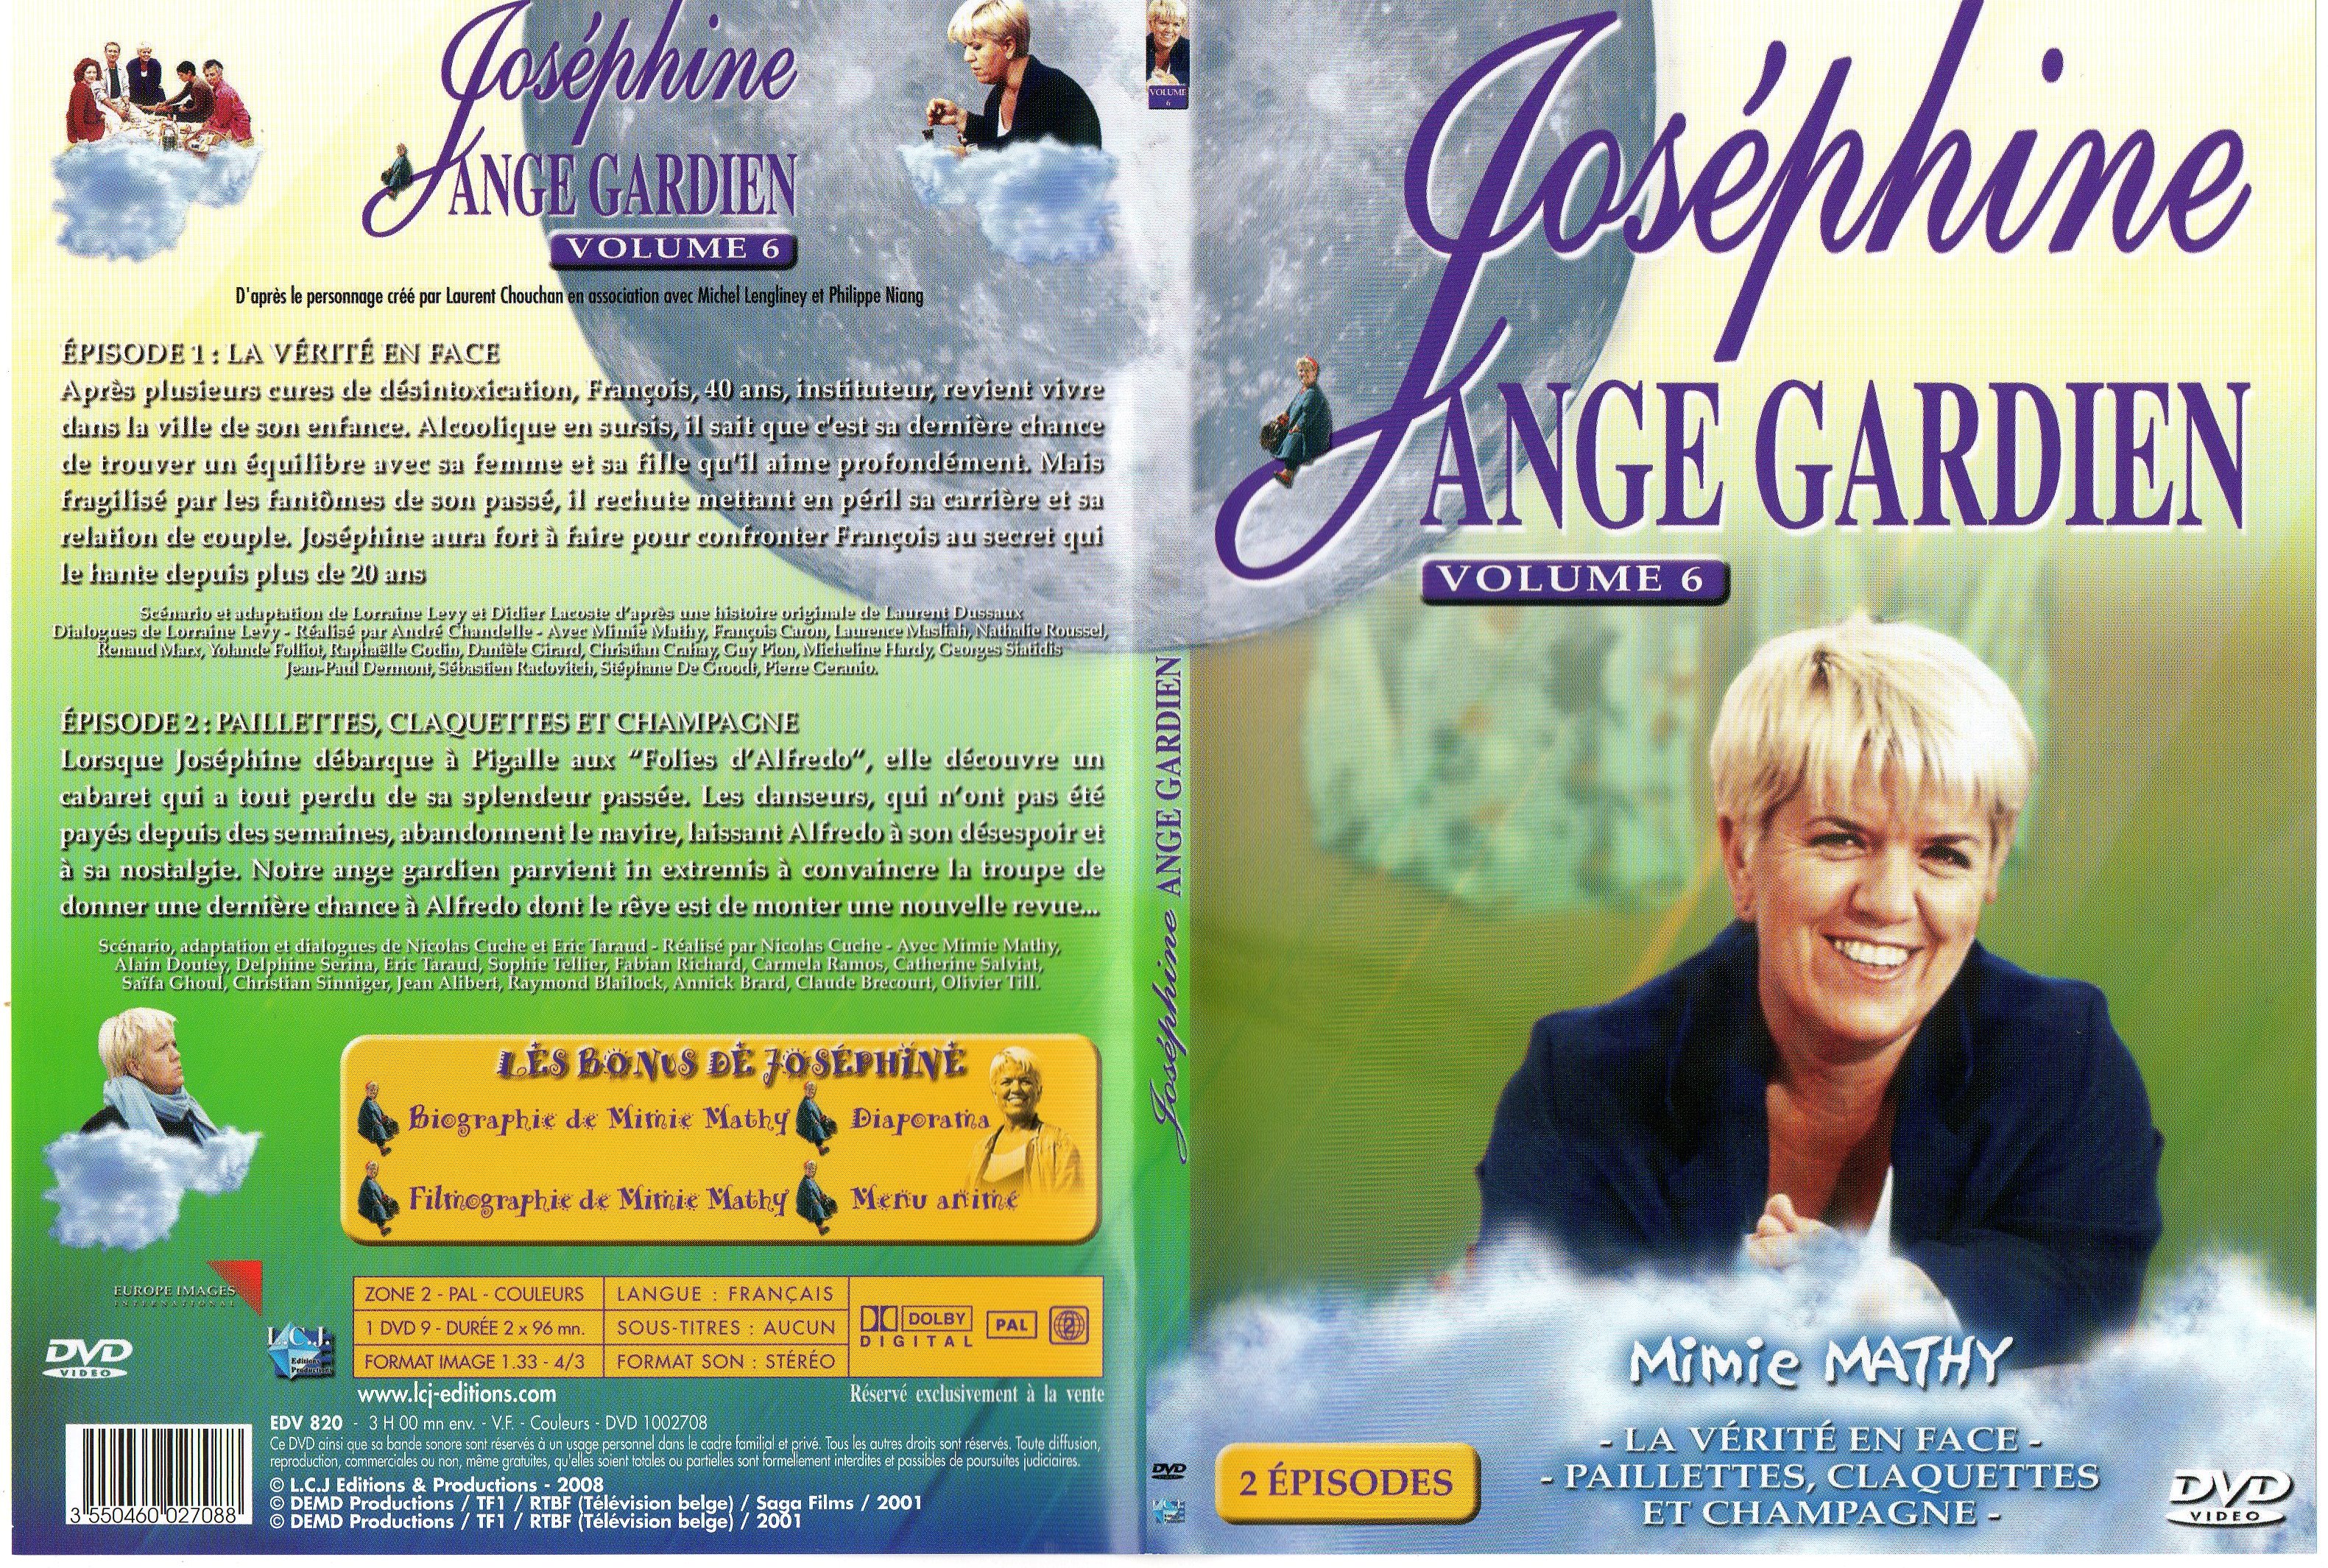 Jaquette DVD Josphine Ange Gardien saison 2 DVD 6